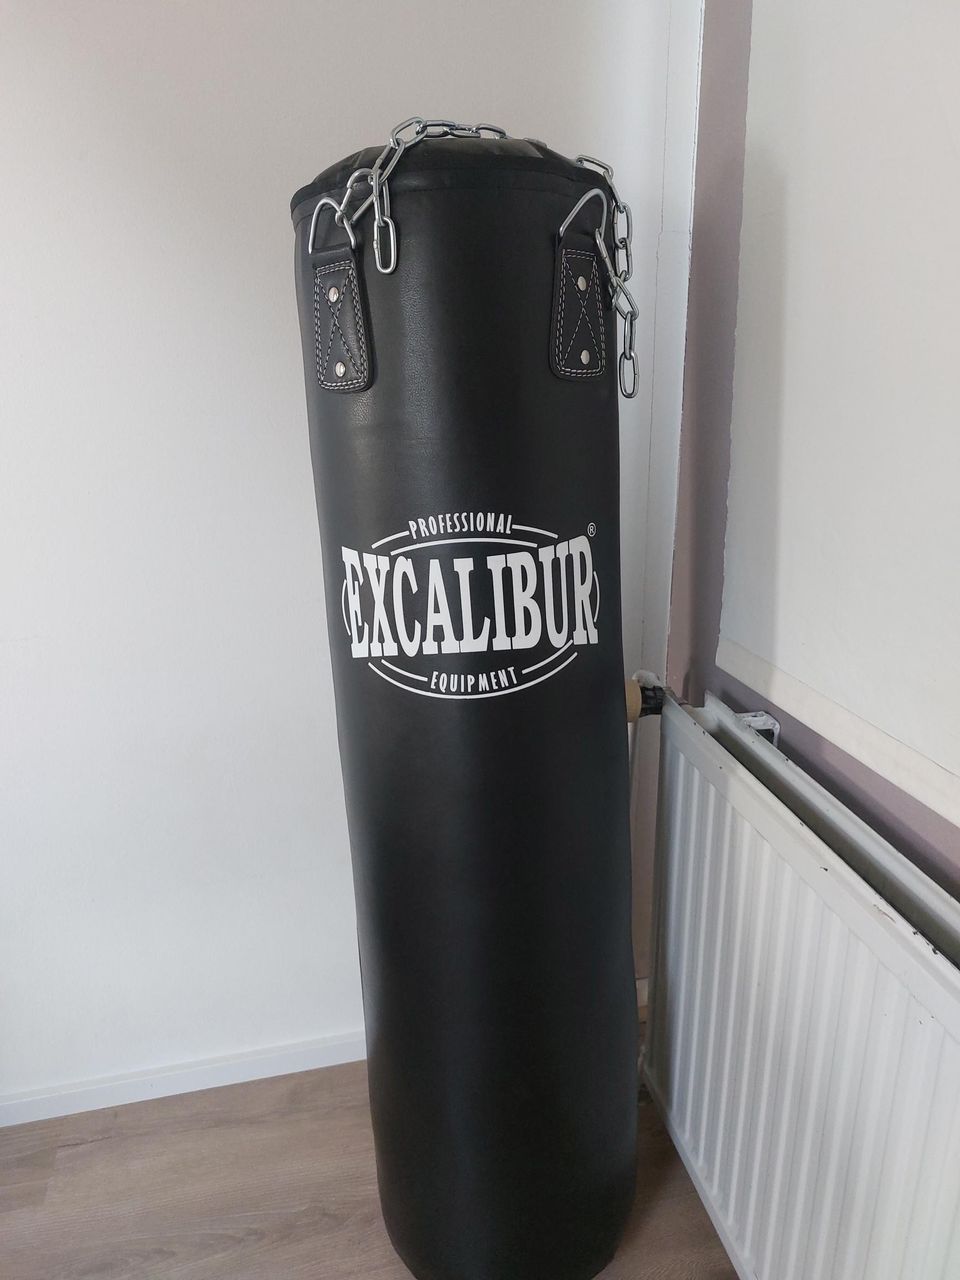 Excalibur 120 Pro nyrkkeilysäkki